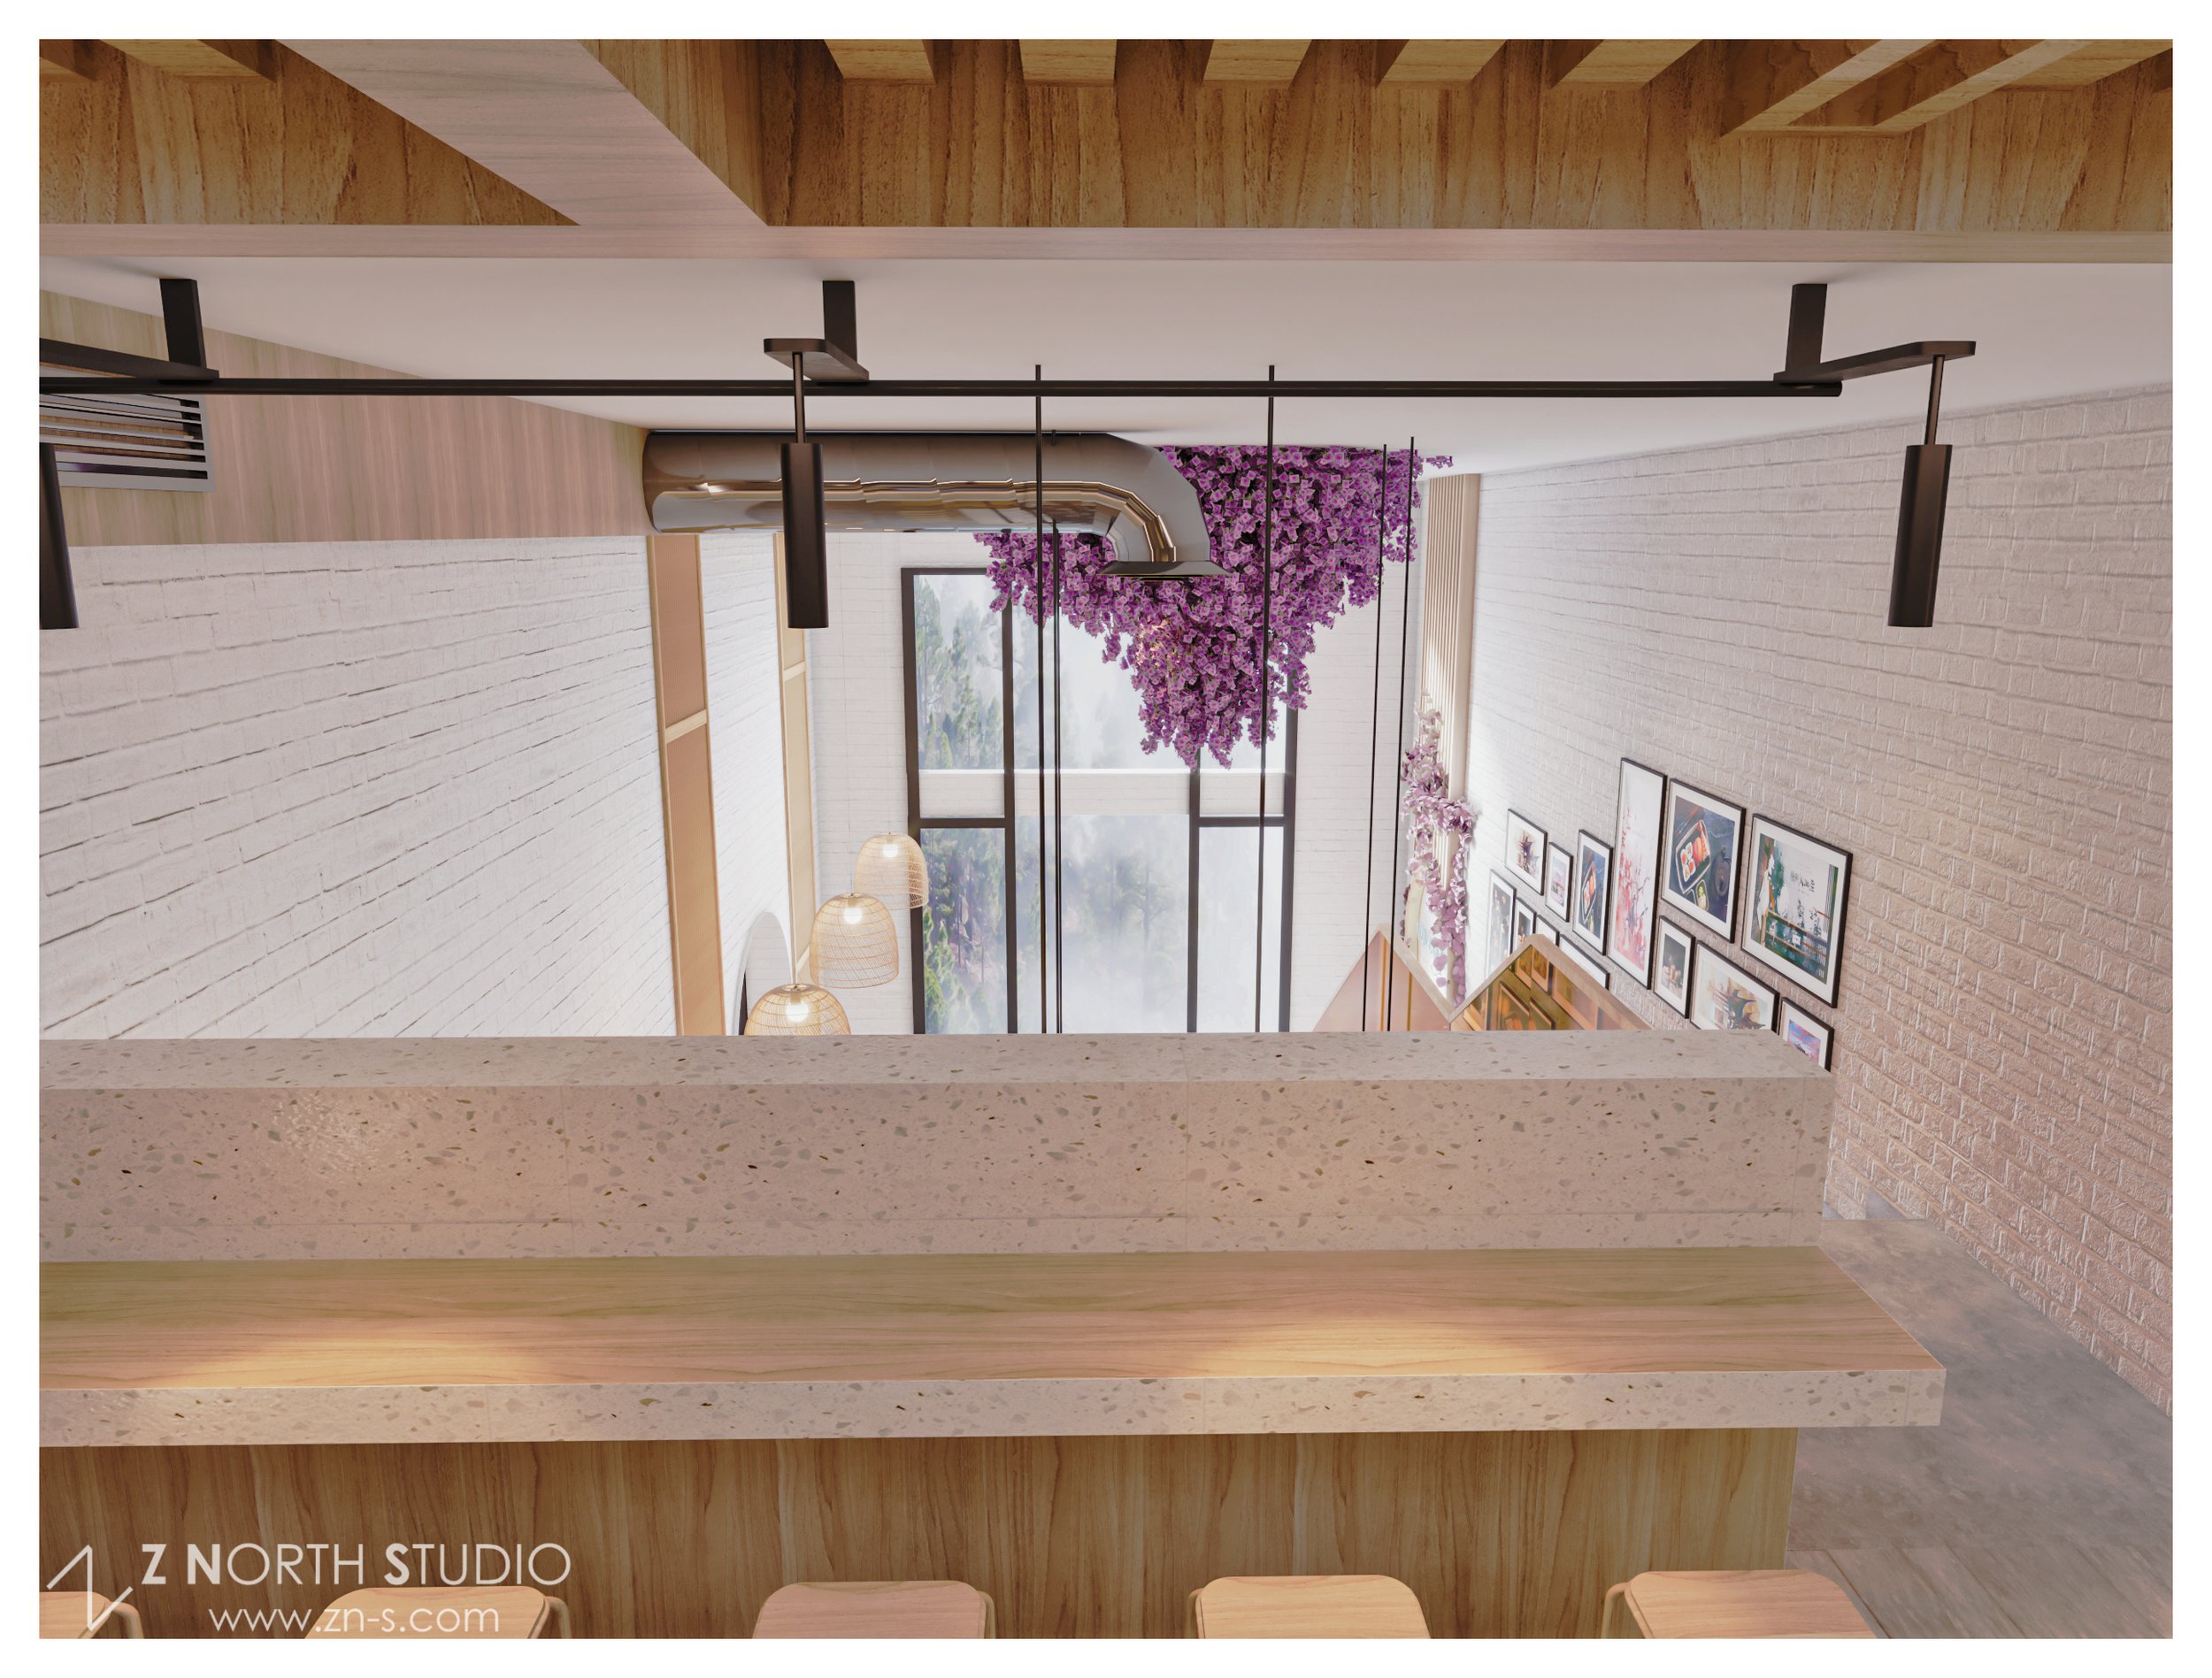 Umai Nori Restaurant Design Z North Studio (11).jpg